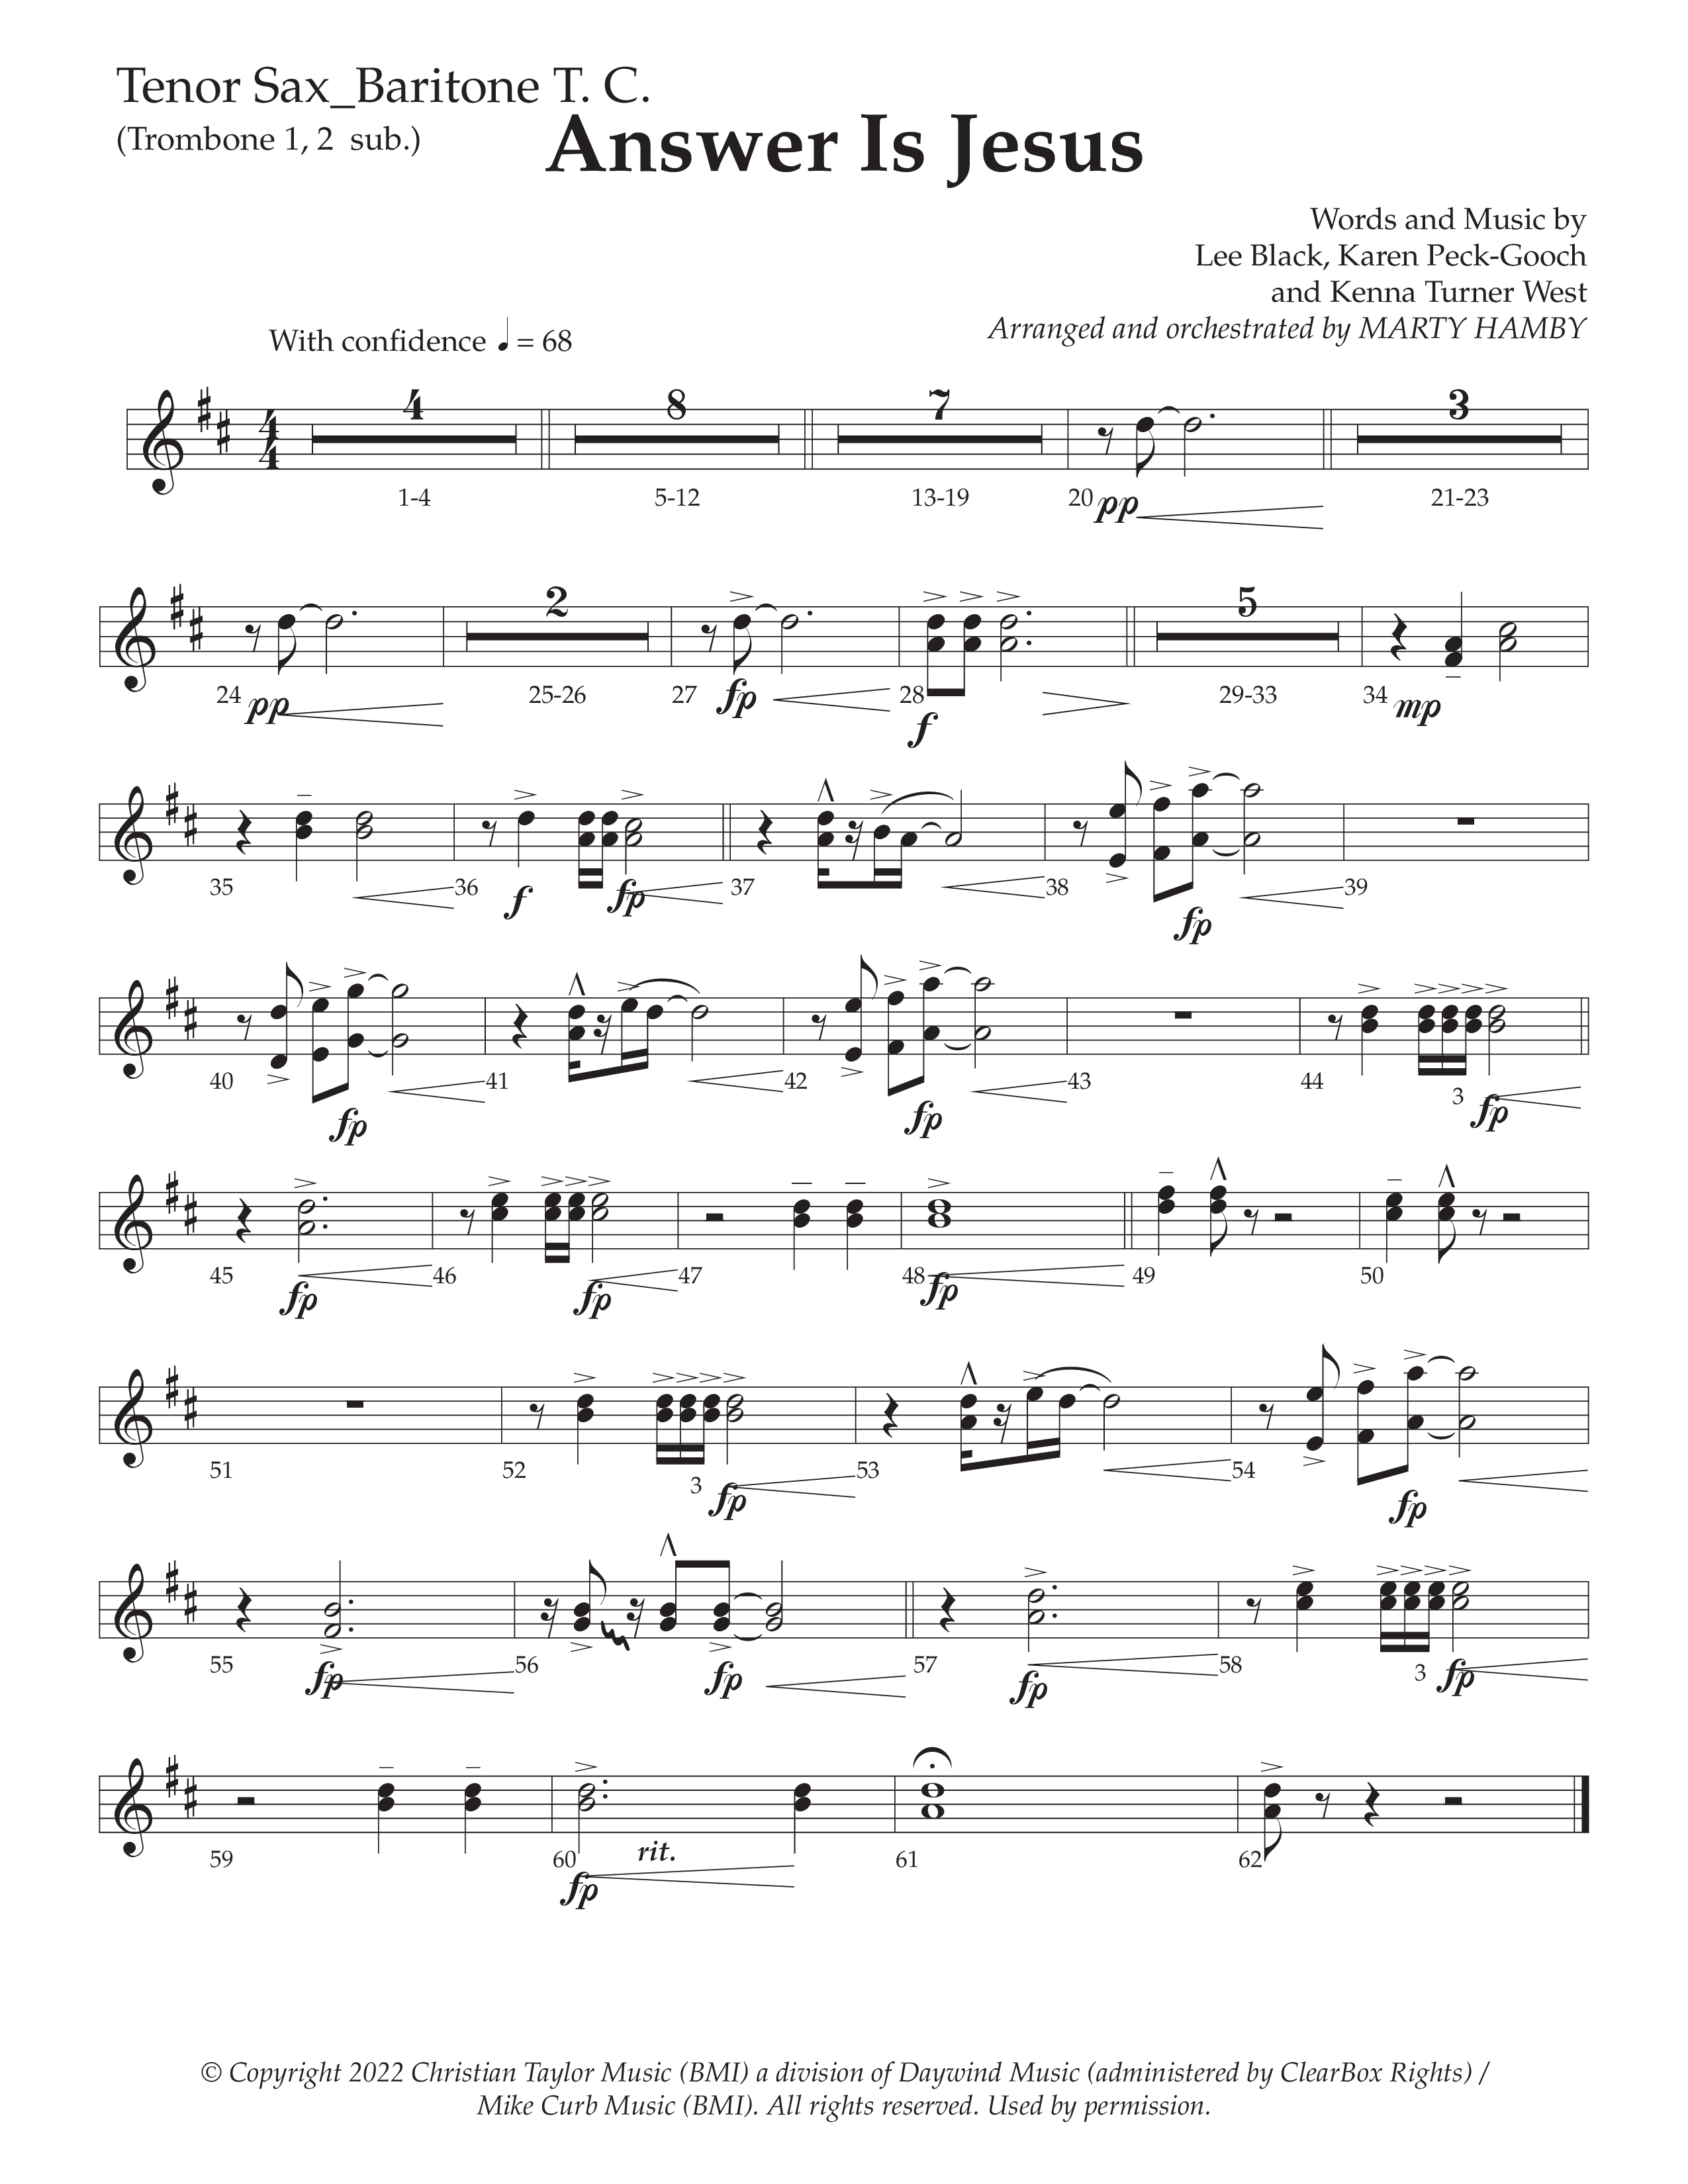 Answer Is Jesus (Choral Anthem SATB) Tenor Sax/Baritone T.C. (Daywind Worship / Arr. Marty Hamby)